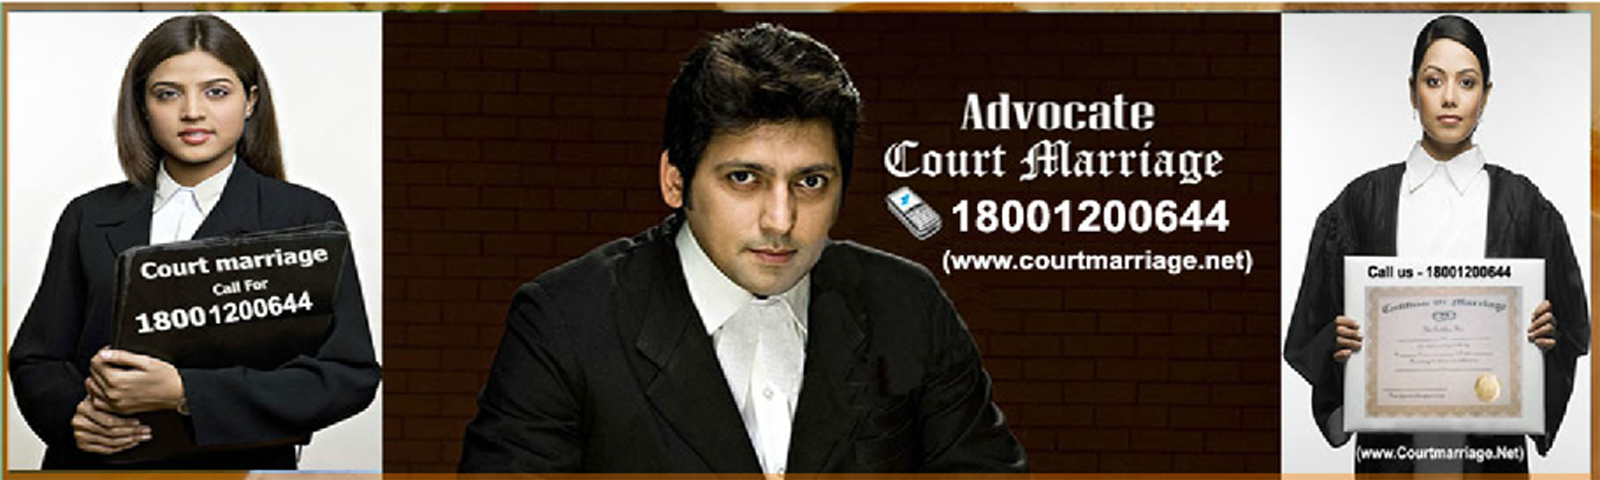 Court Marriage advocate Dehradun 2022, Online Event